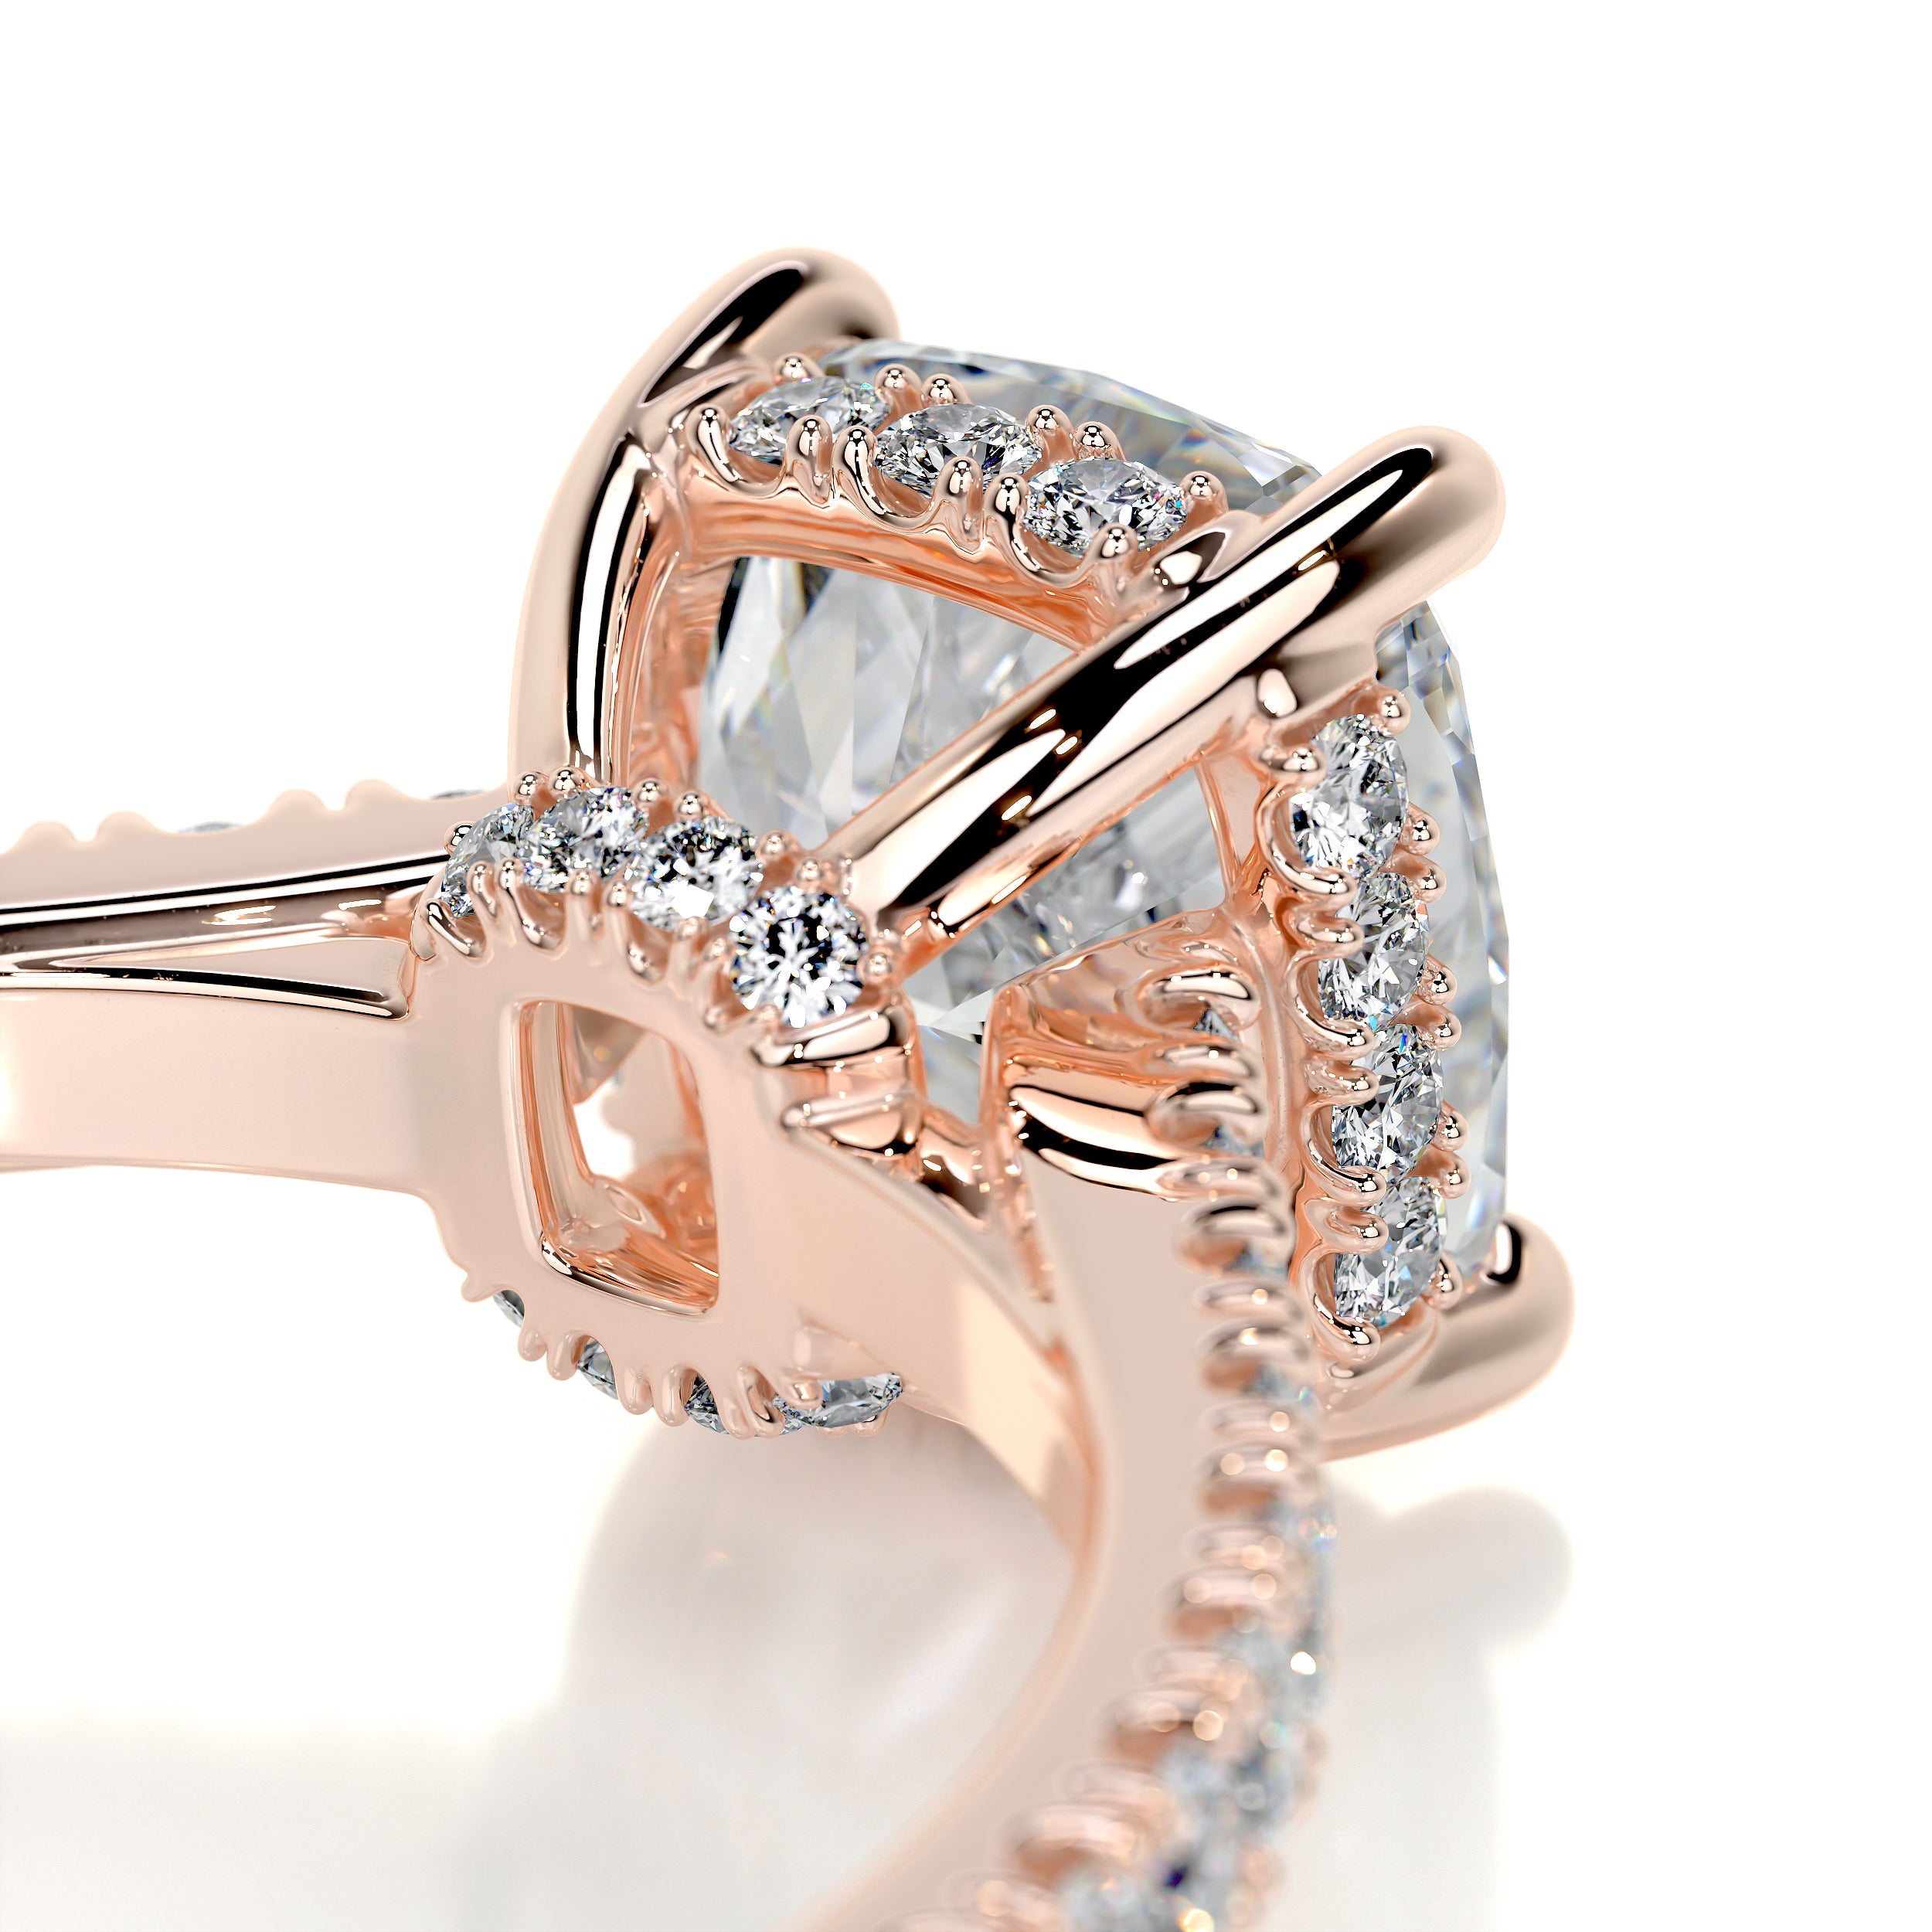 Cassandra Diamond Engagement Ring   (2 Carat) -14K Rose Gold